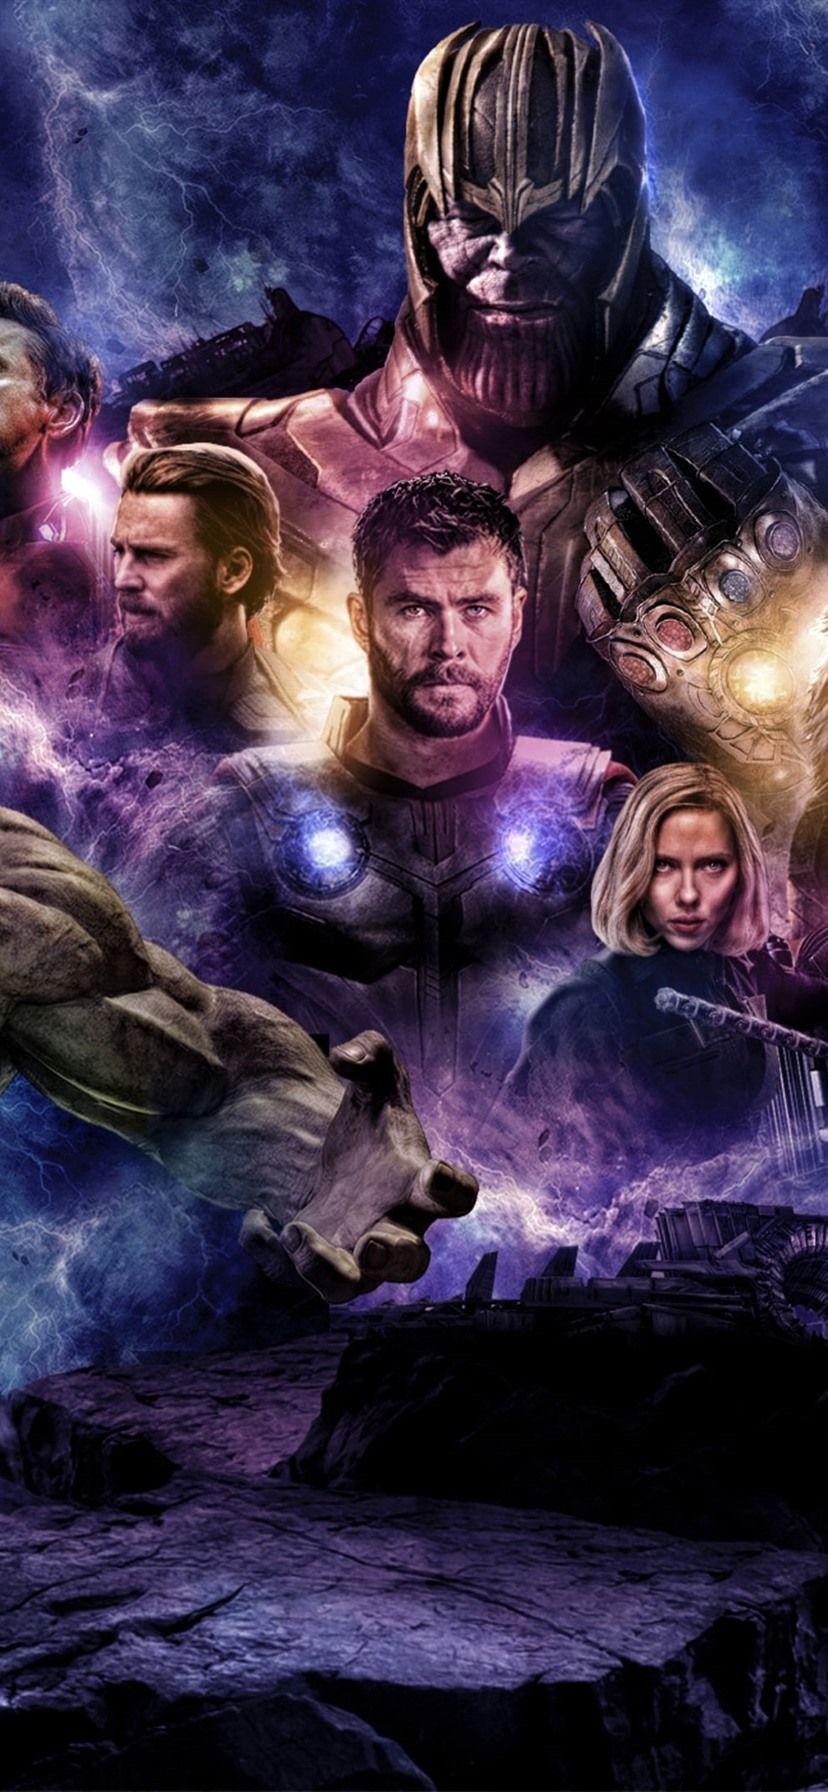 Wallpaper Avengers: Endgame, DC Comics movie 2019 3840x2160 UHD 4K